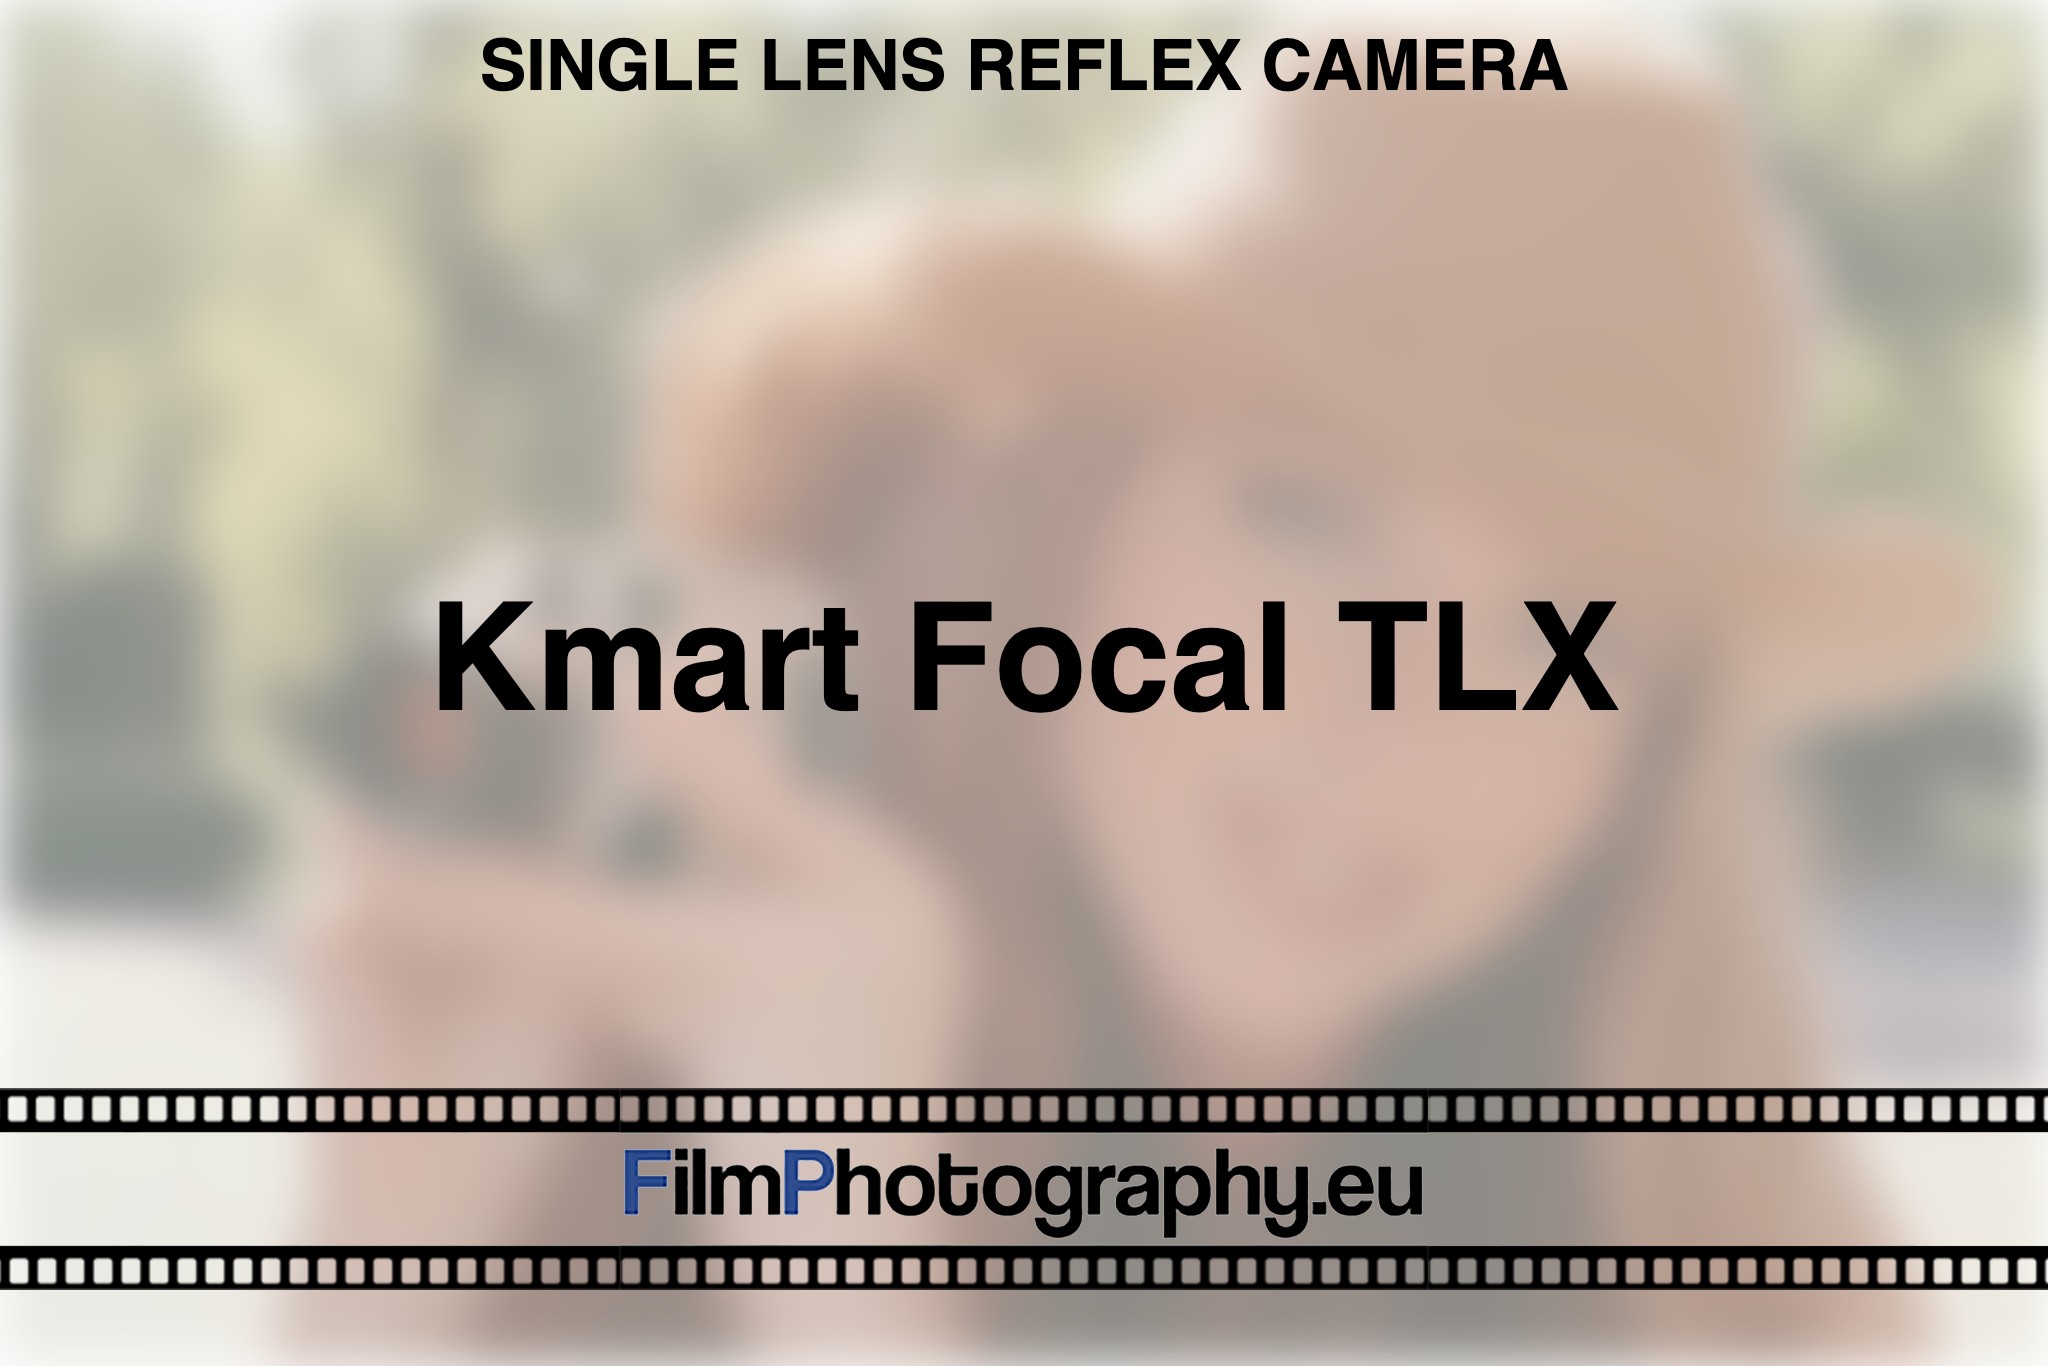 kmart-focal-tlx-single-lens-reflex-camera-bnv